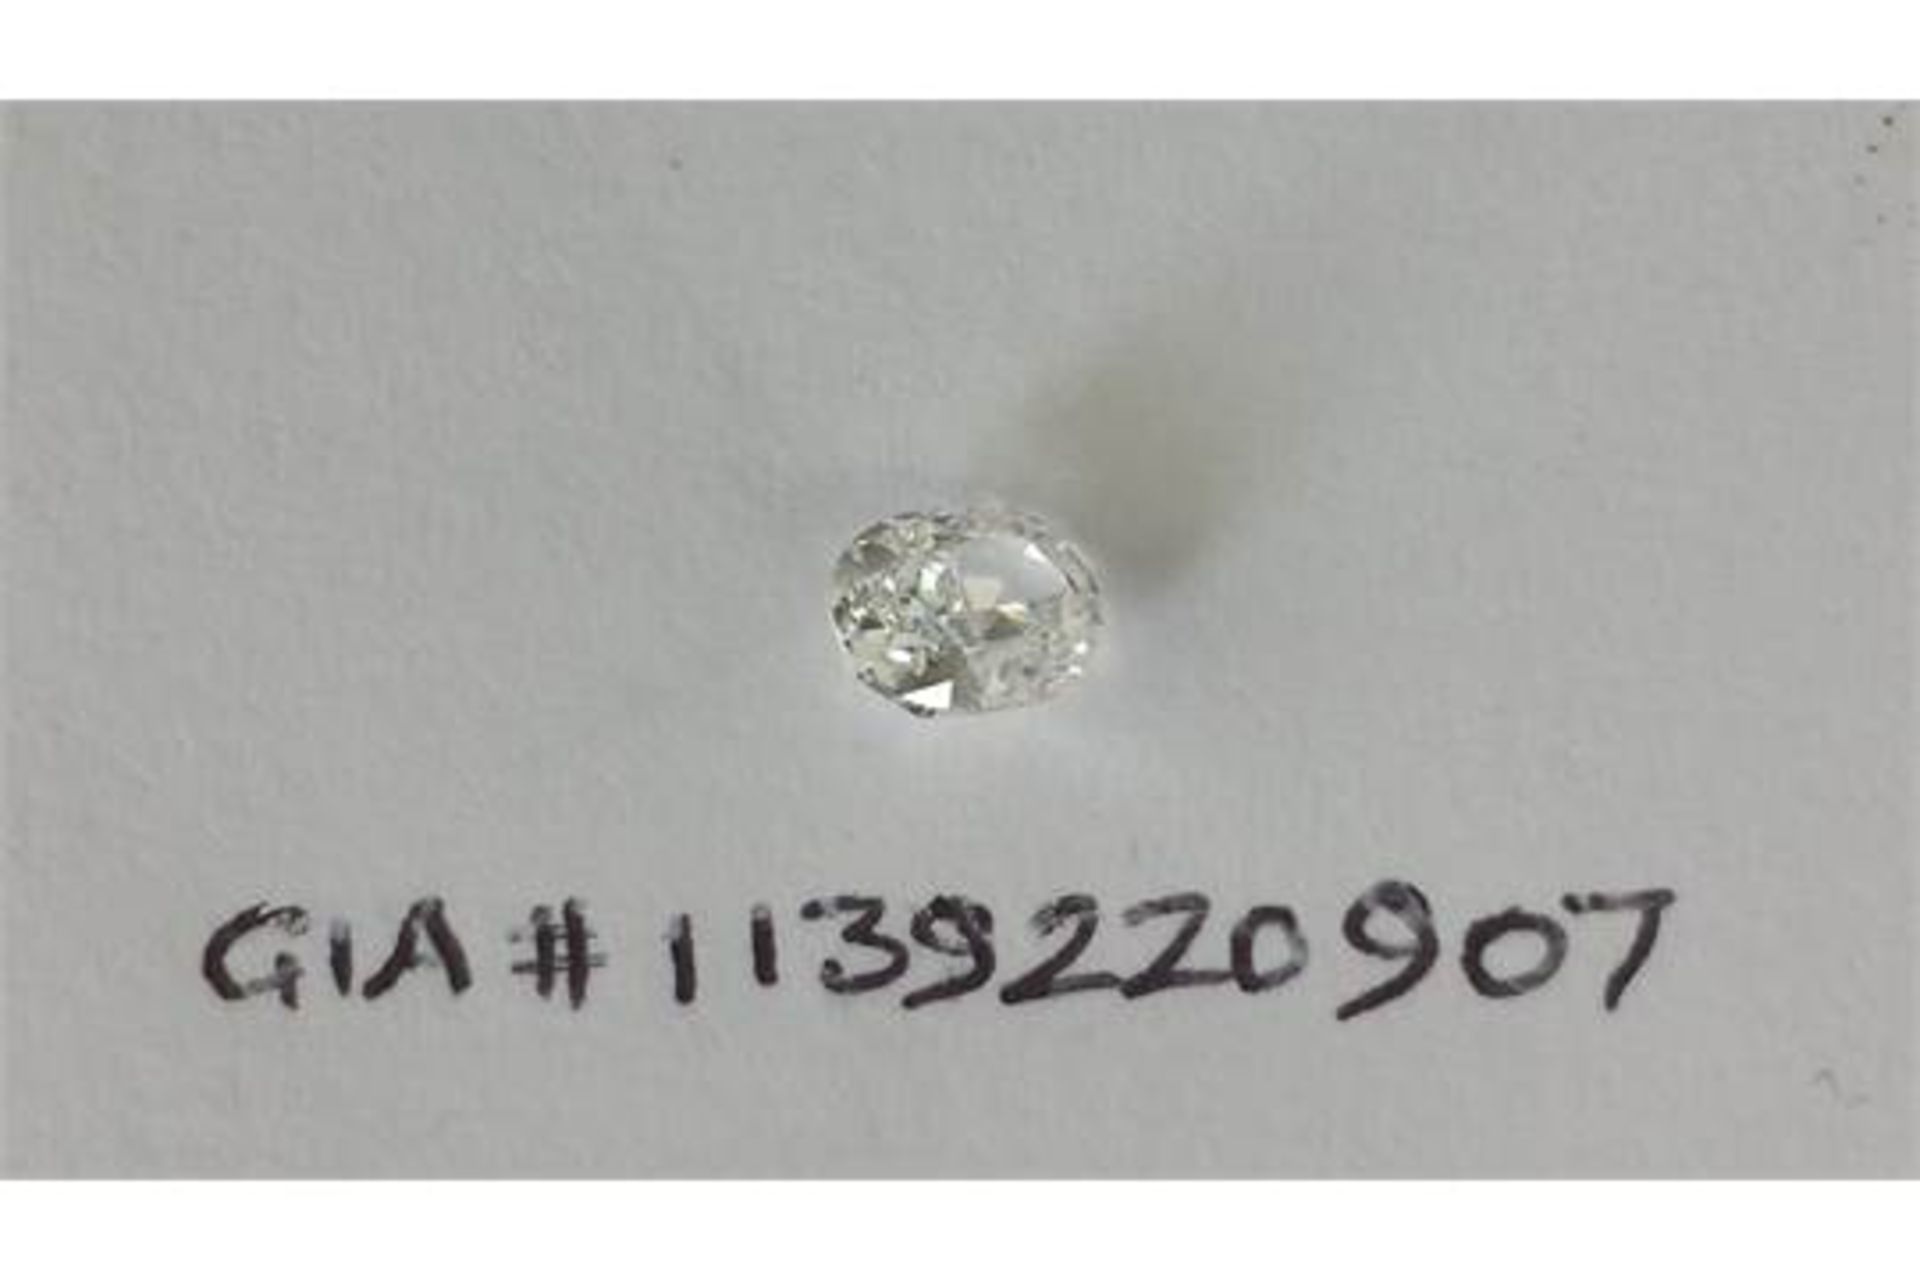 0.53 carat Oval Modified Brilliant Diamond - Image 2 of 4